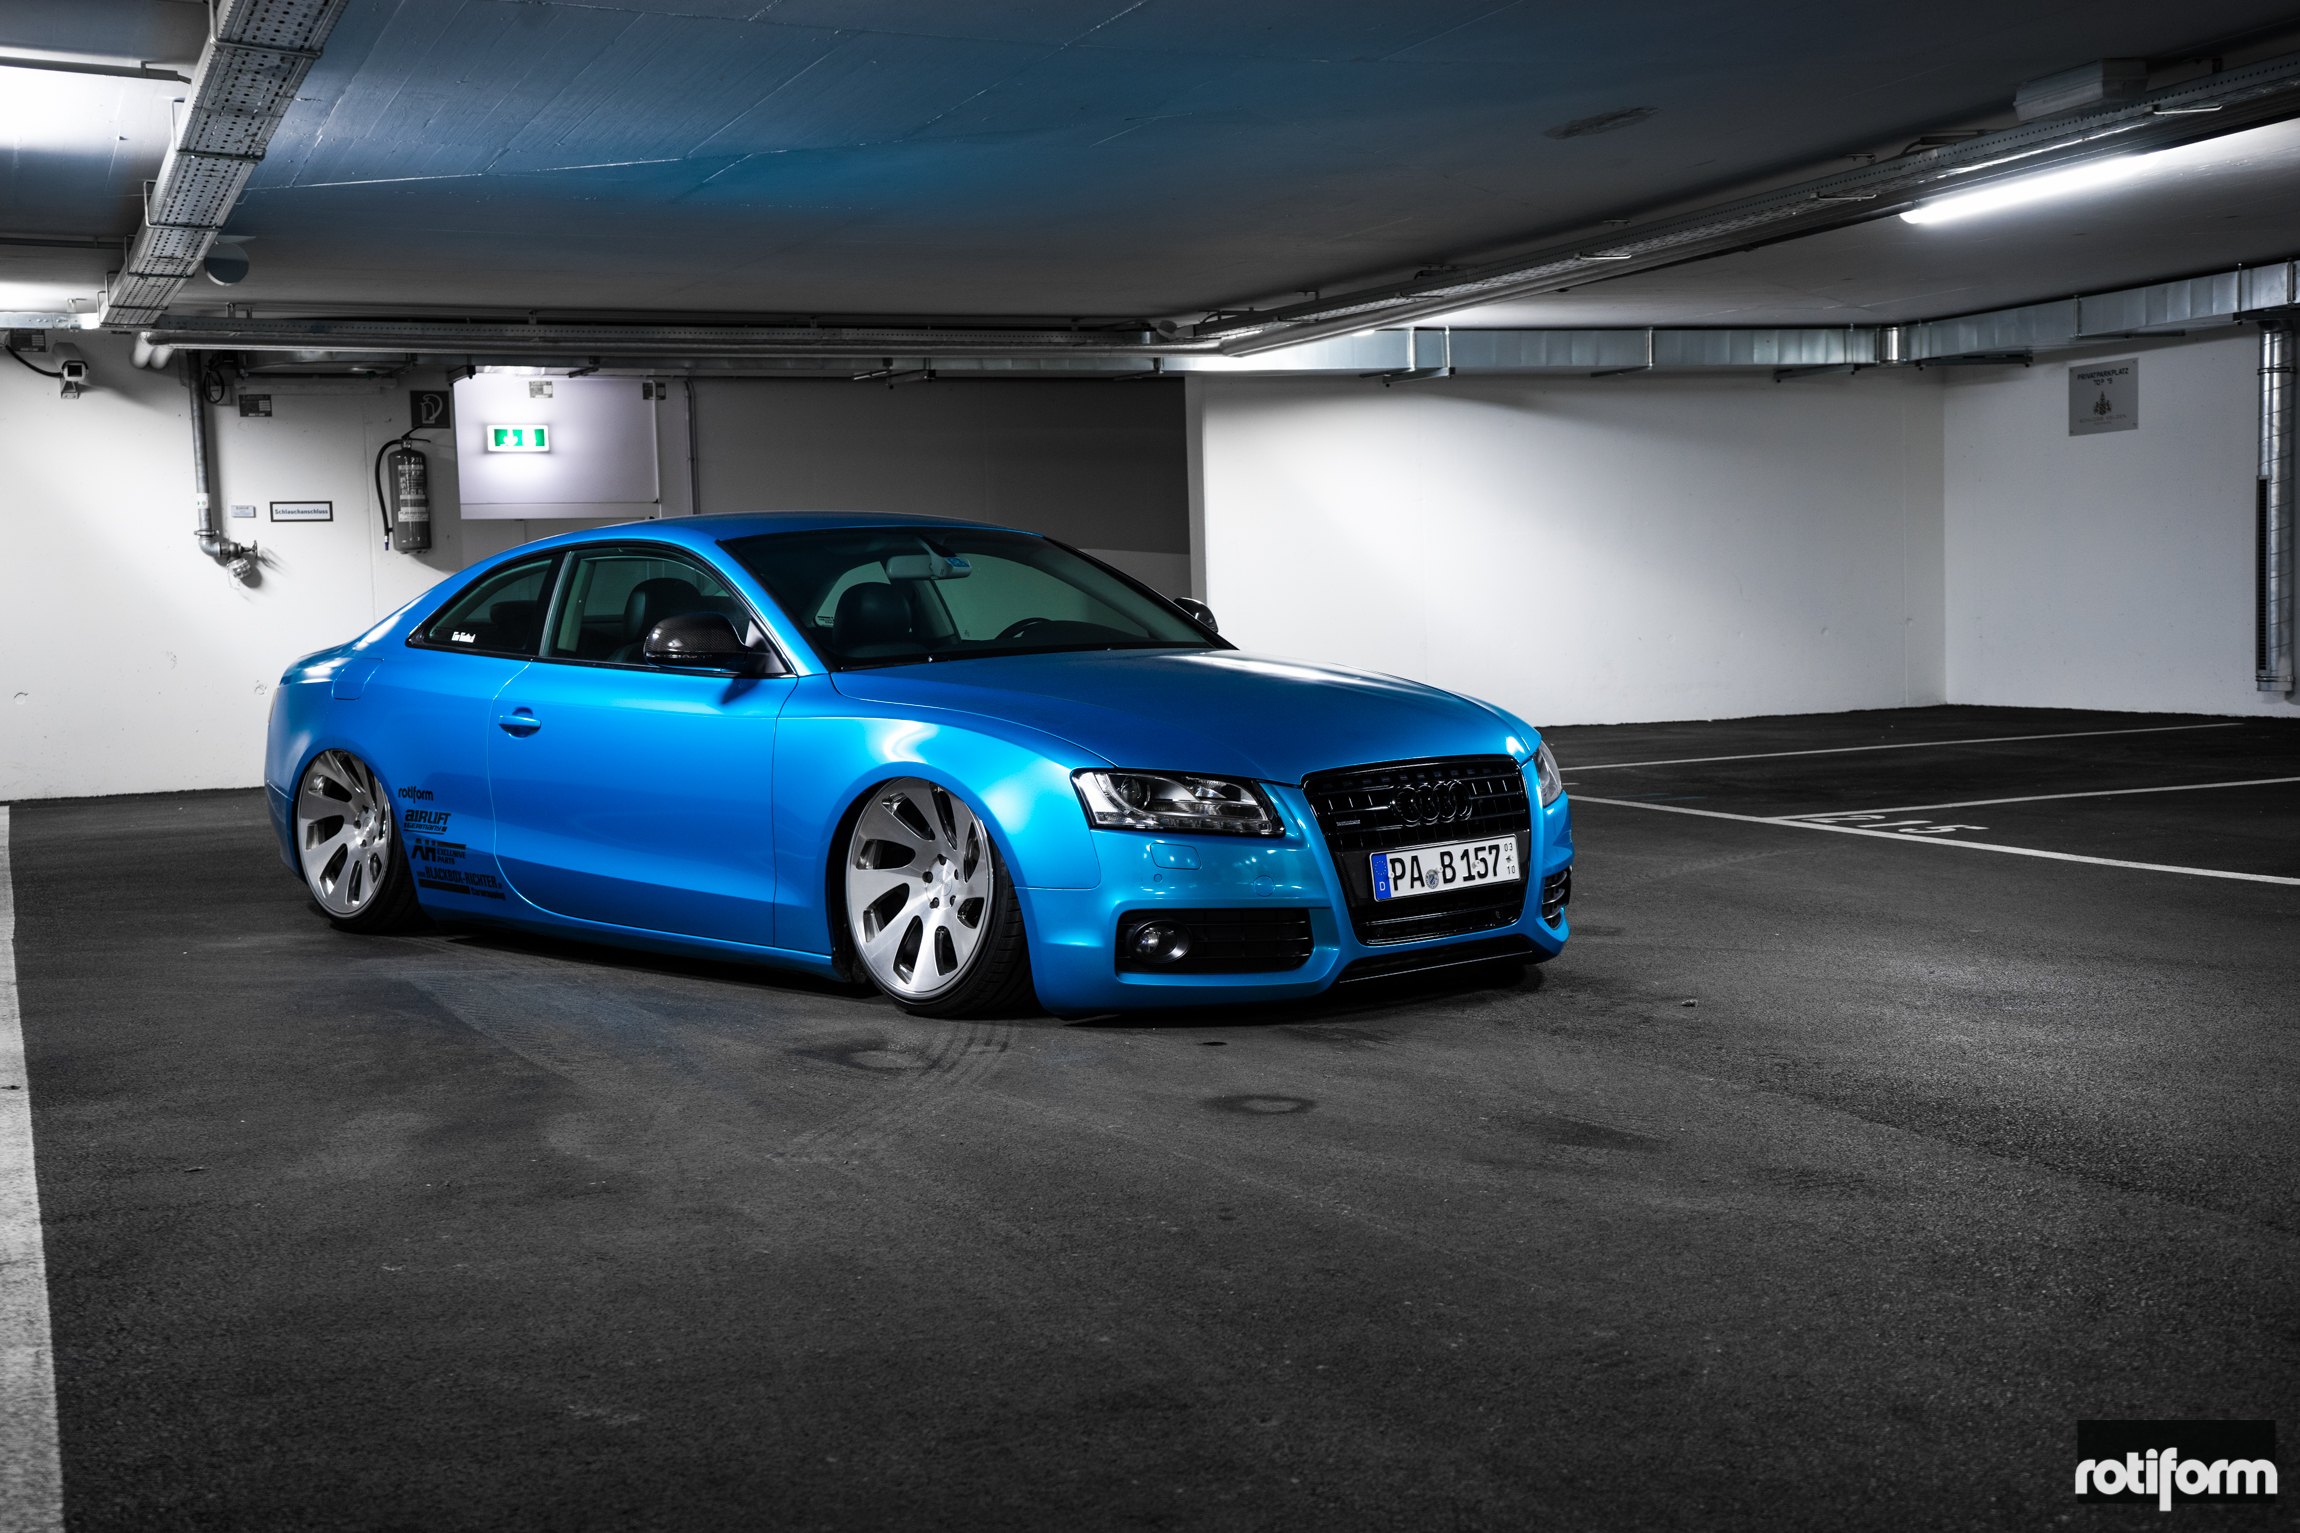 Dark Smoke Aftermarket Headlights on Blue Audi A5 - Photo by Rotiform